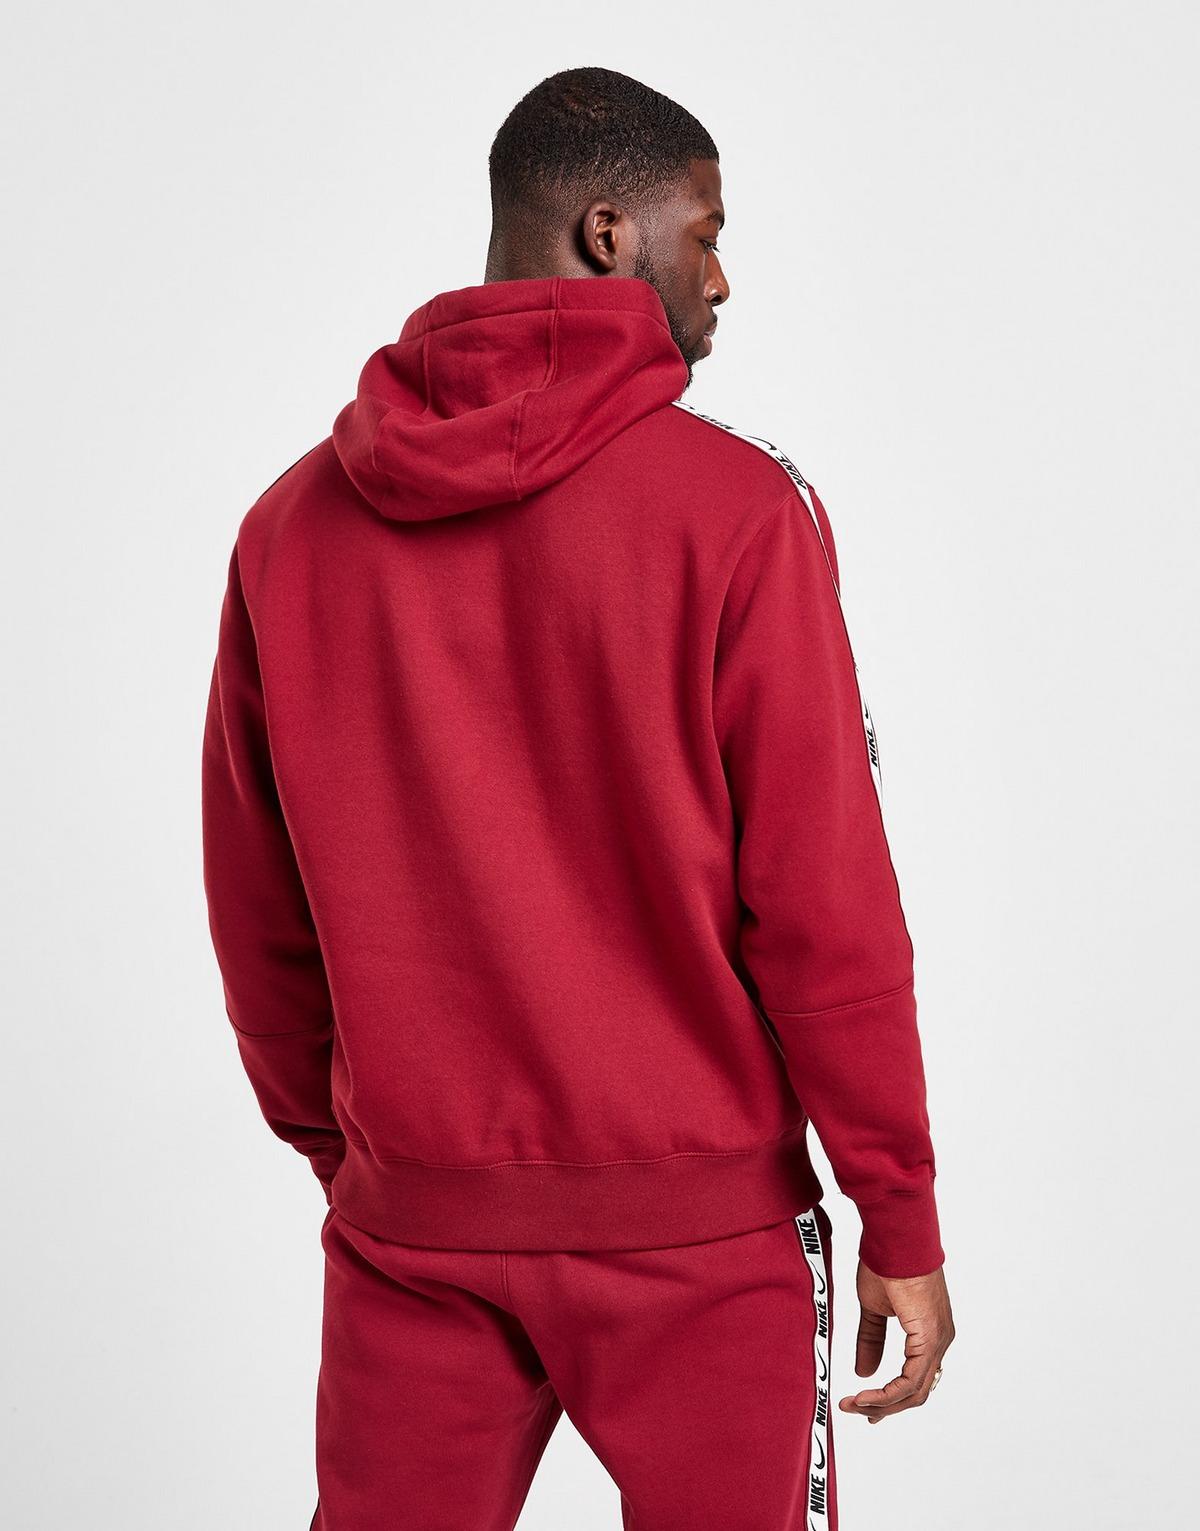 Nike Tape Fleece Overhead Hoodie in Red for Men - Lyst